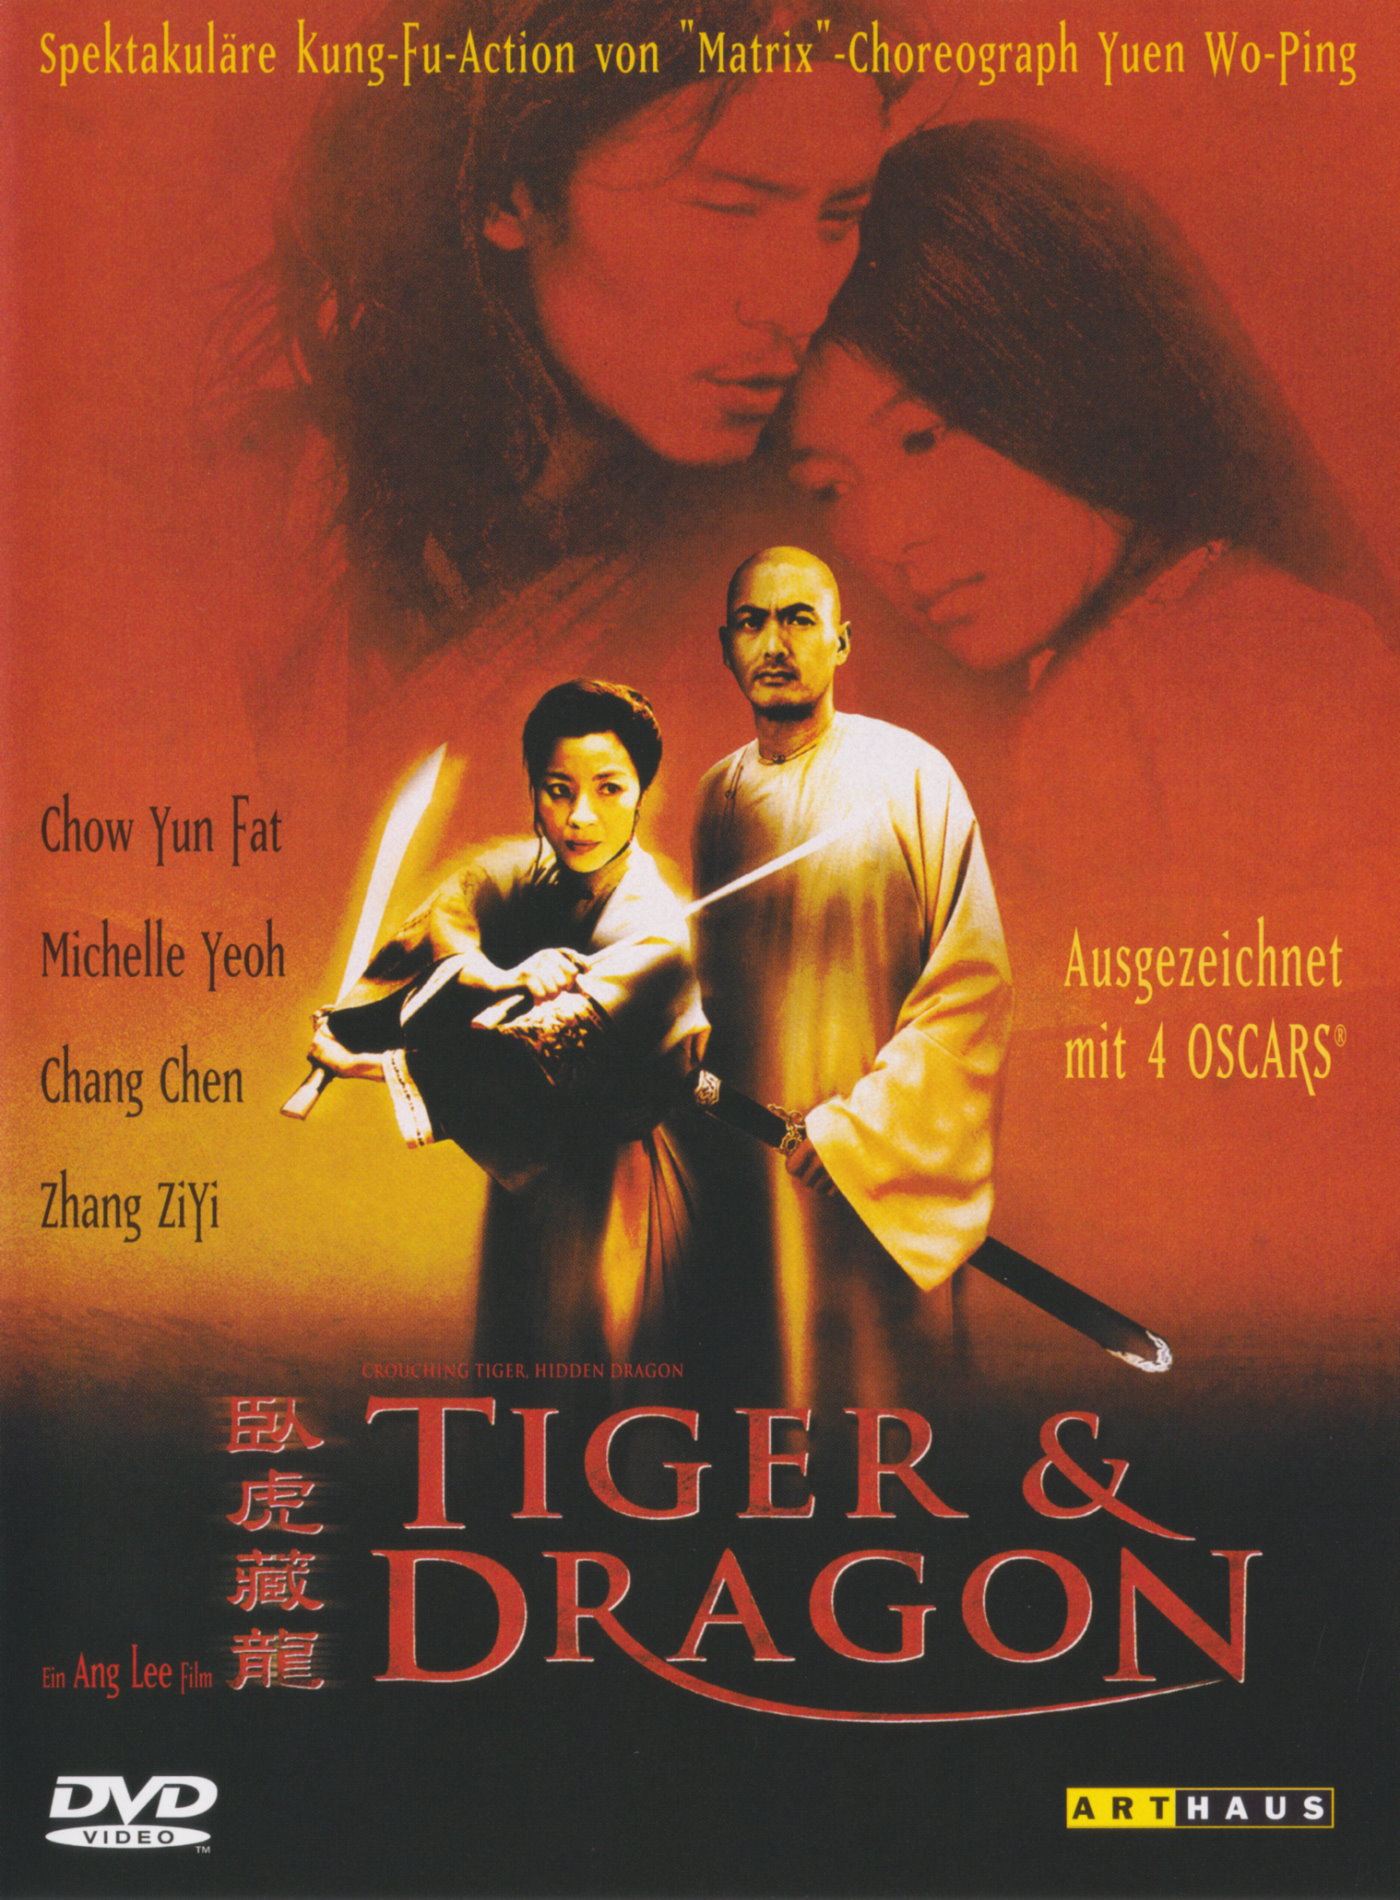 Cover - Tiger & Dragon.jpg